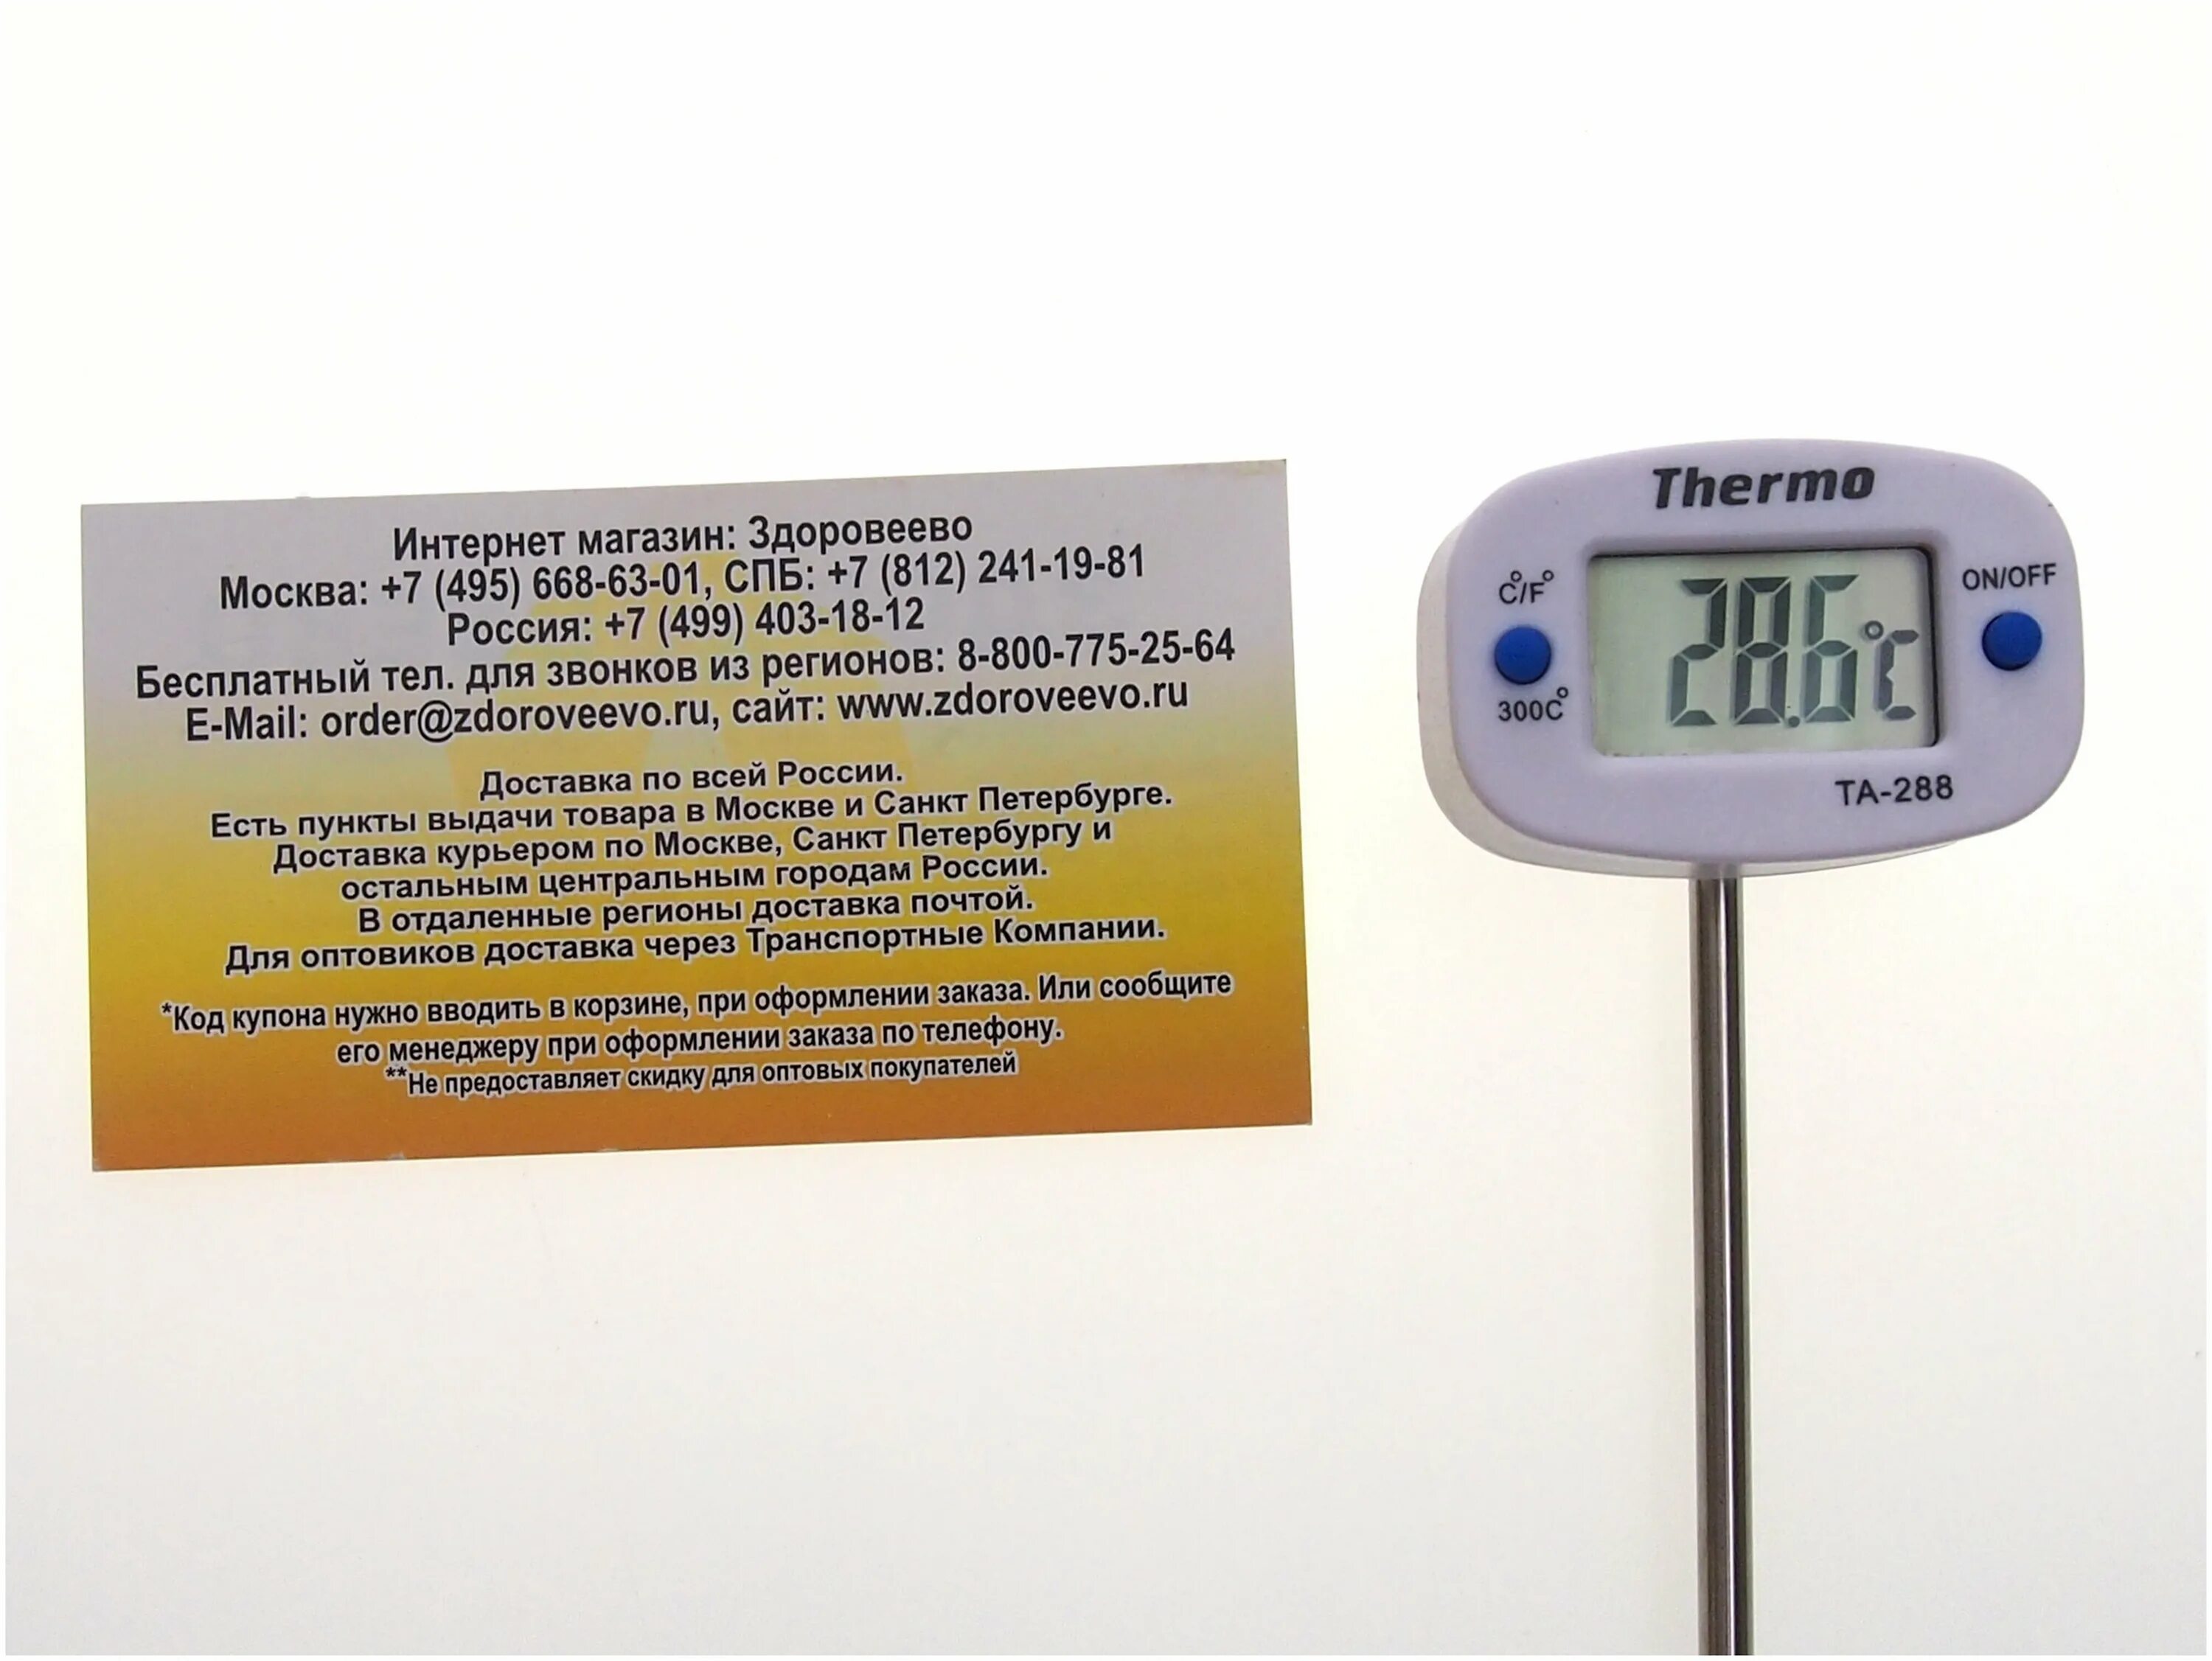 Термометр ta-288 с щупом 7 см.. Электронный градусник на стену. Thermo та-288 7 см. Сертификат соответствия на термометр цифровой поворотный та-288.